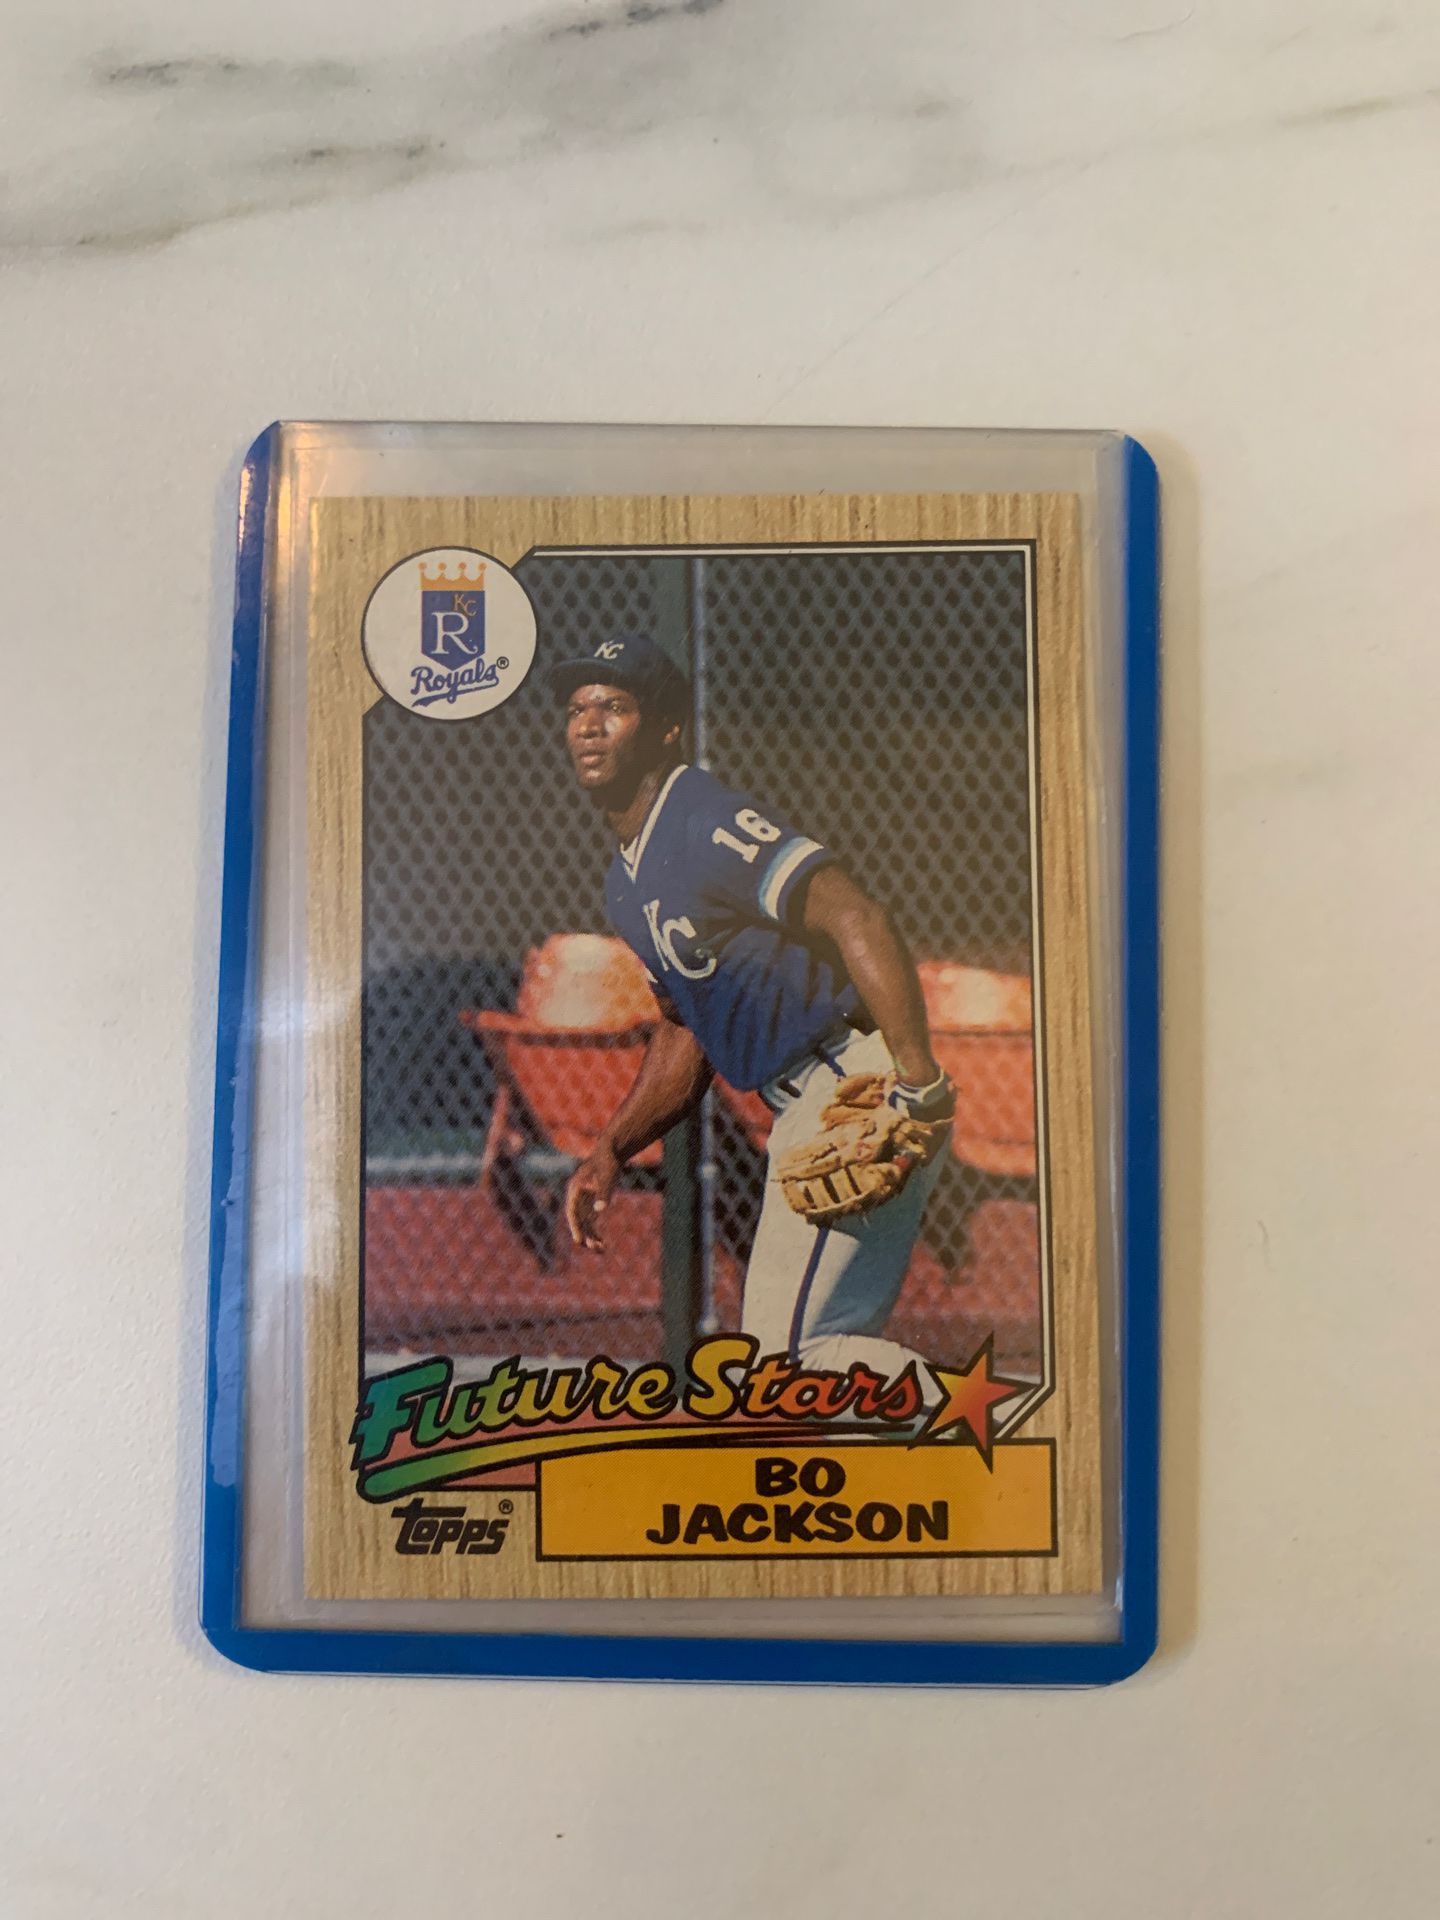 1987 Topps Future Stars Bo Jackson #170 Baseball card